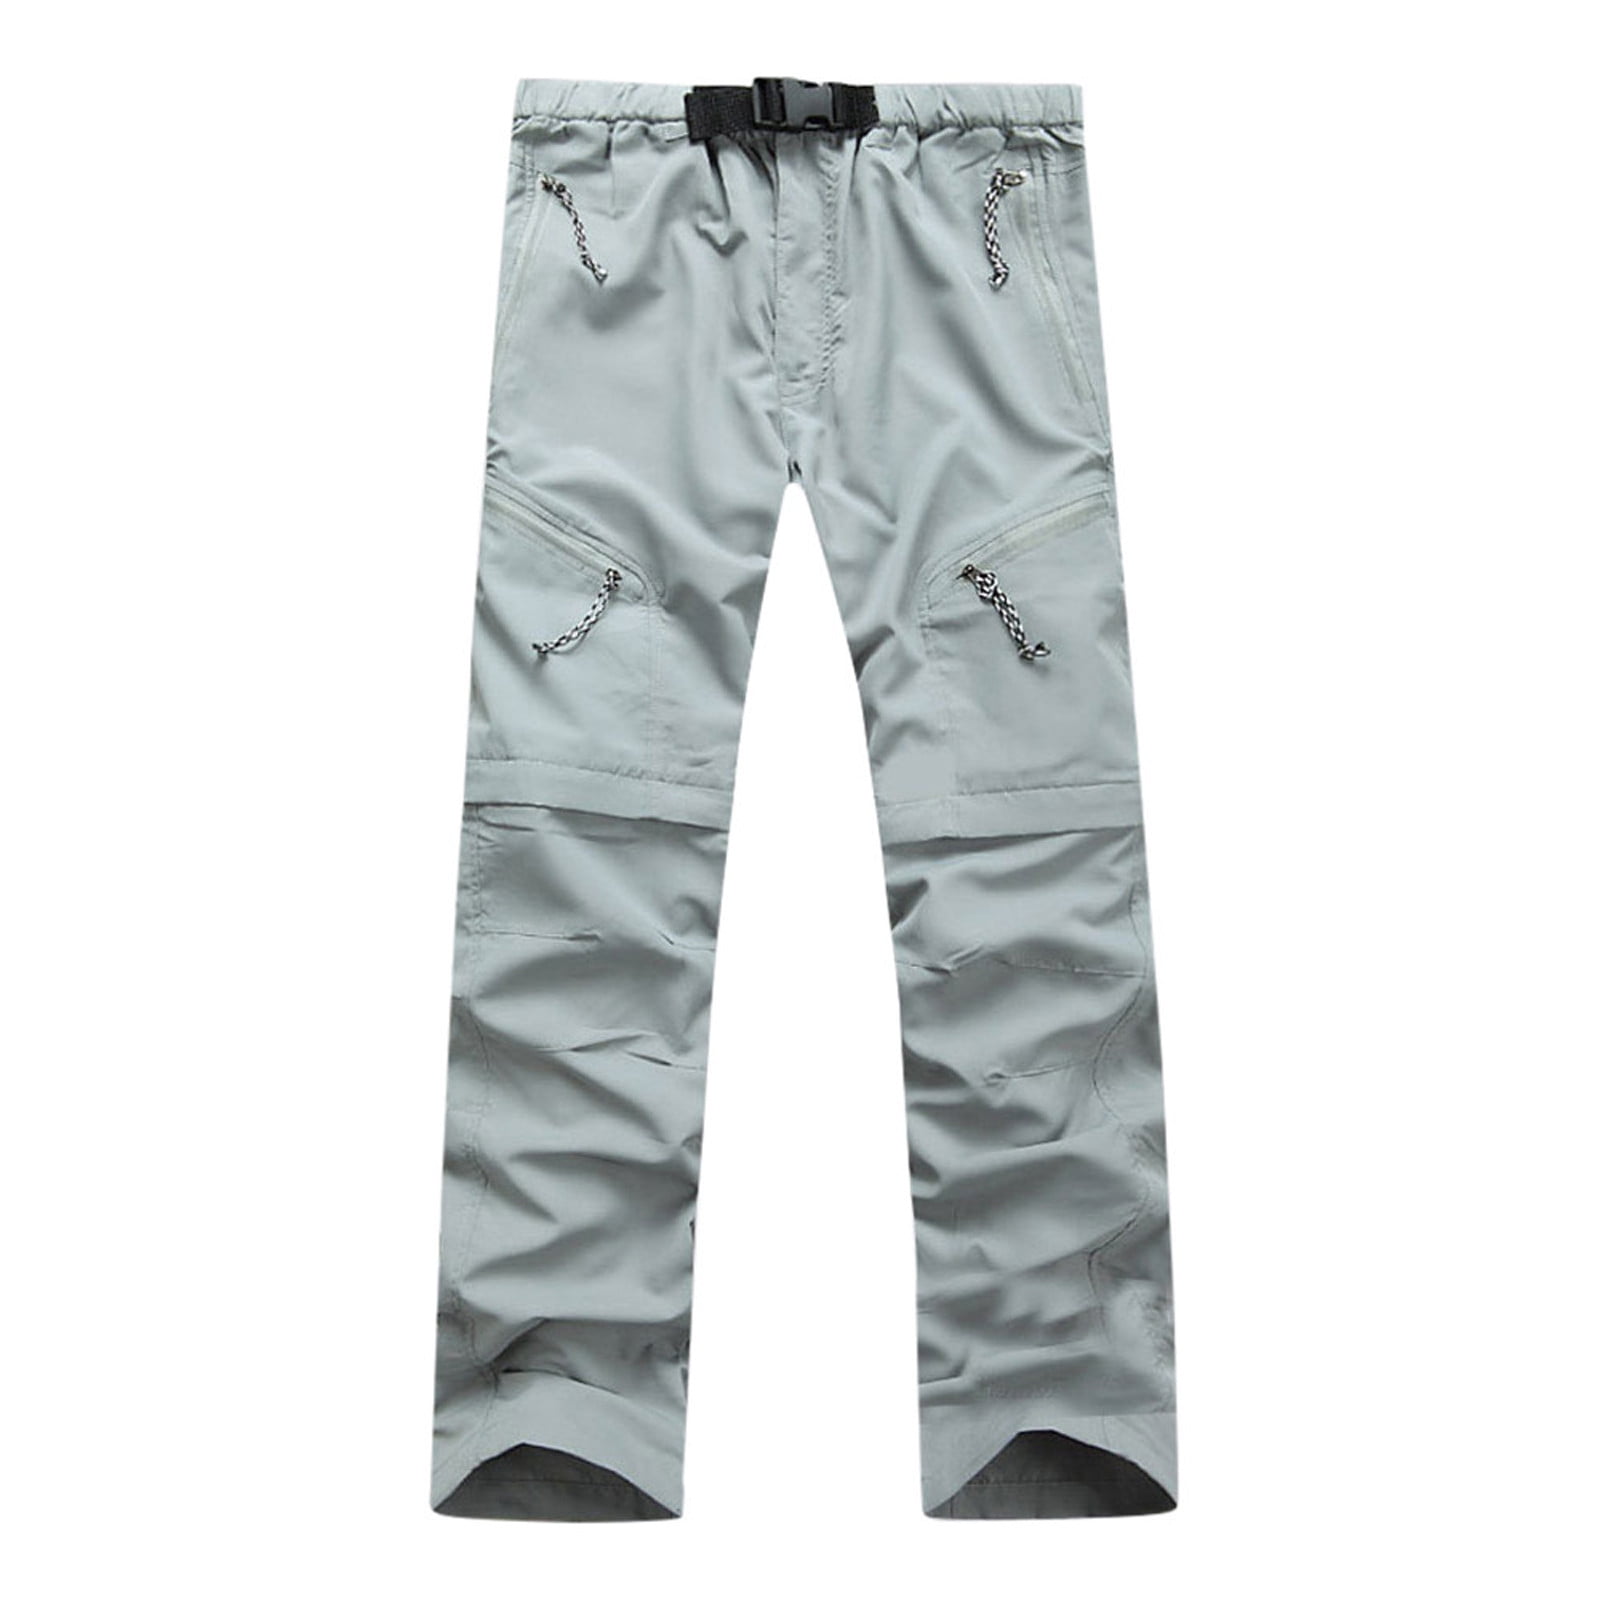 IOTUERG Mens Hiking Pants Convertible Zip Off Lightweight Quick Dry ...